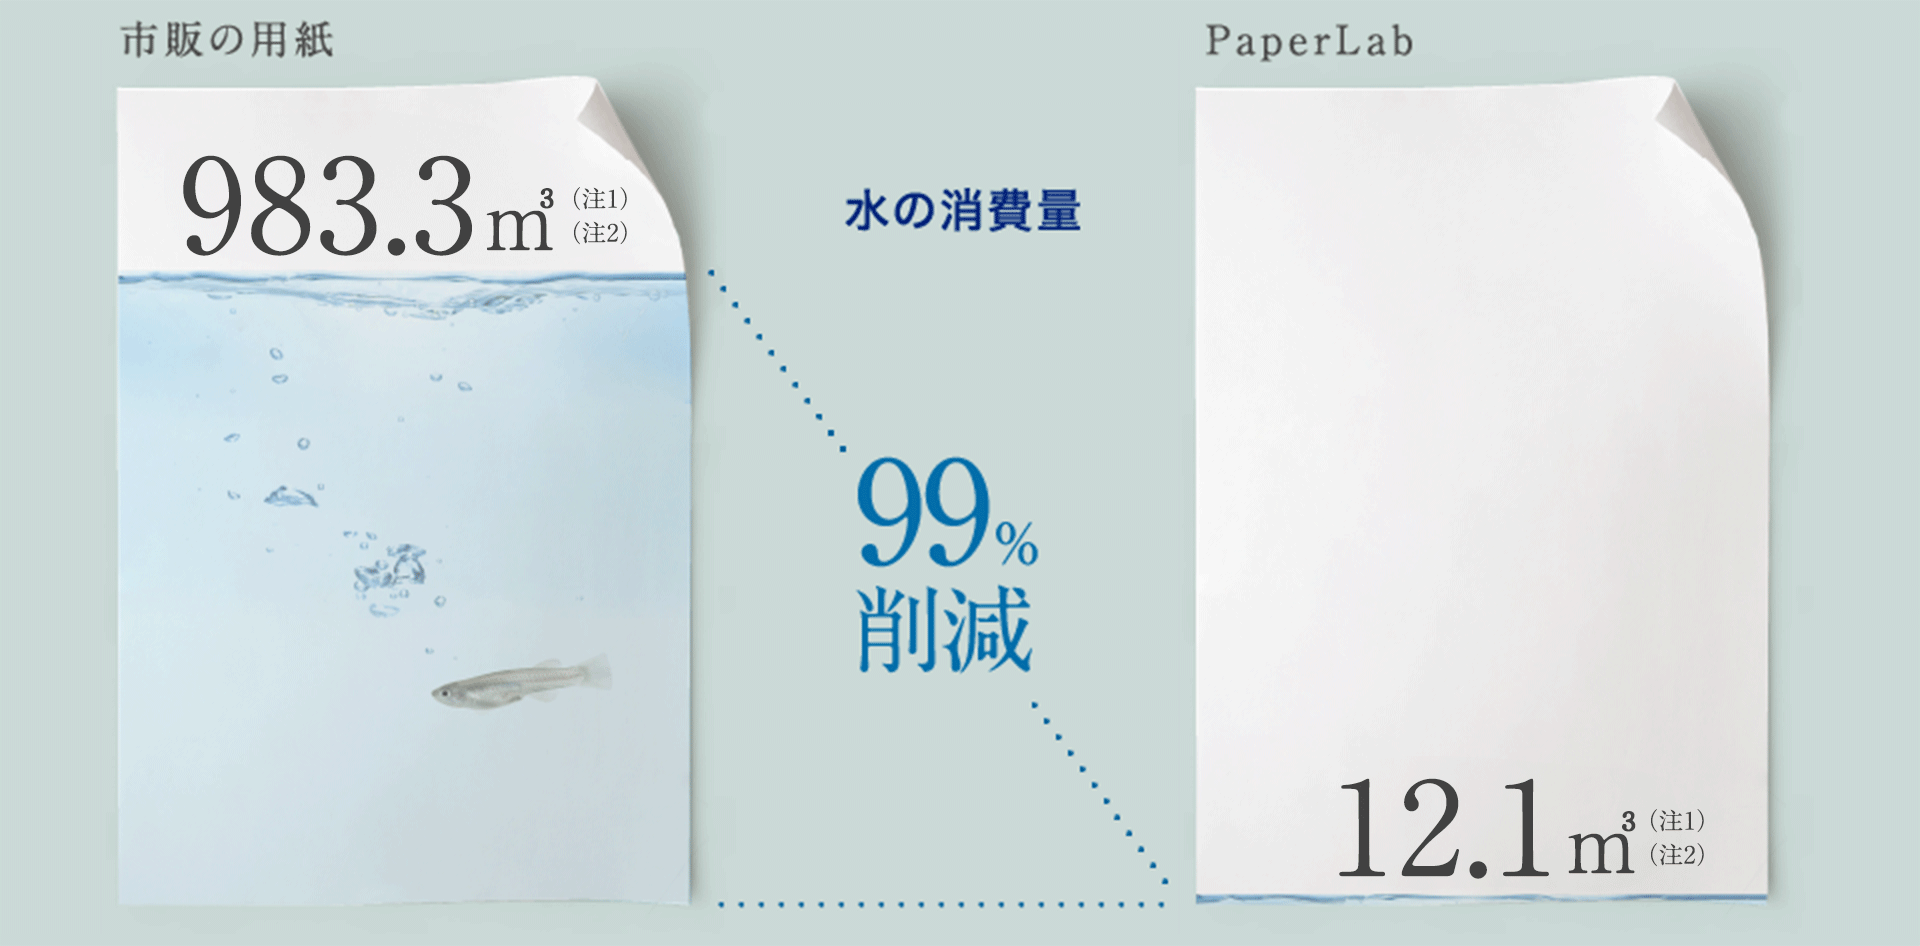 市販の用紙 983.3m³（注1）（注2） 水の消費量99%削減 PaperLab 12.1m³（注1）（注2）